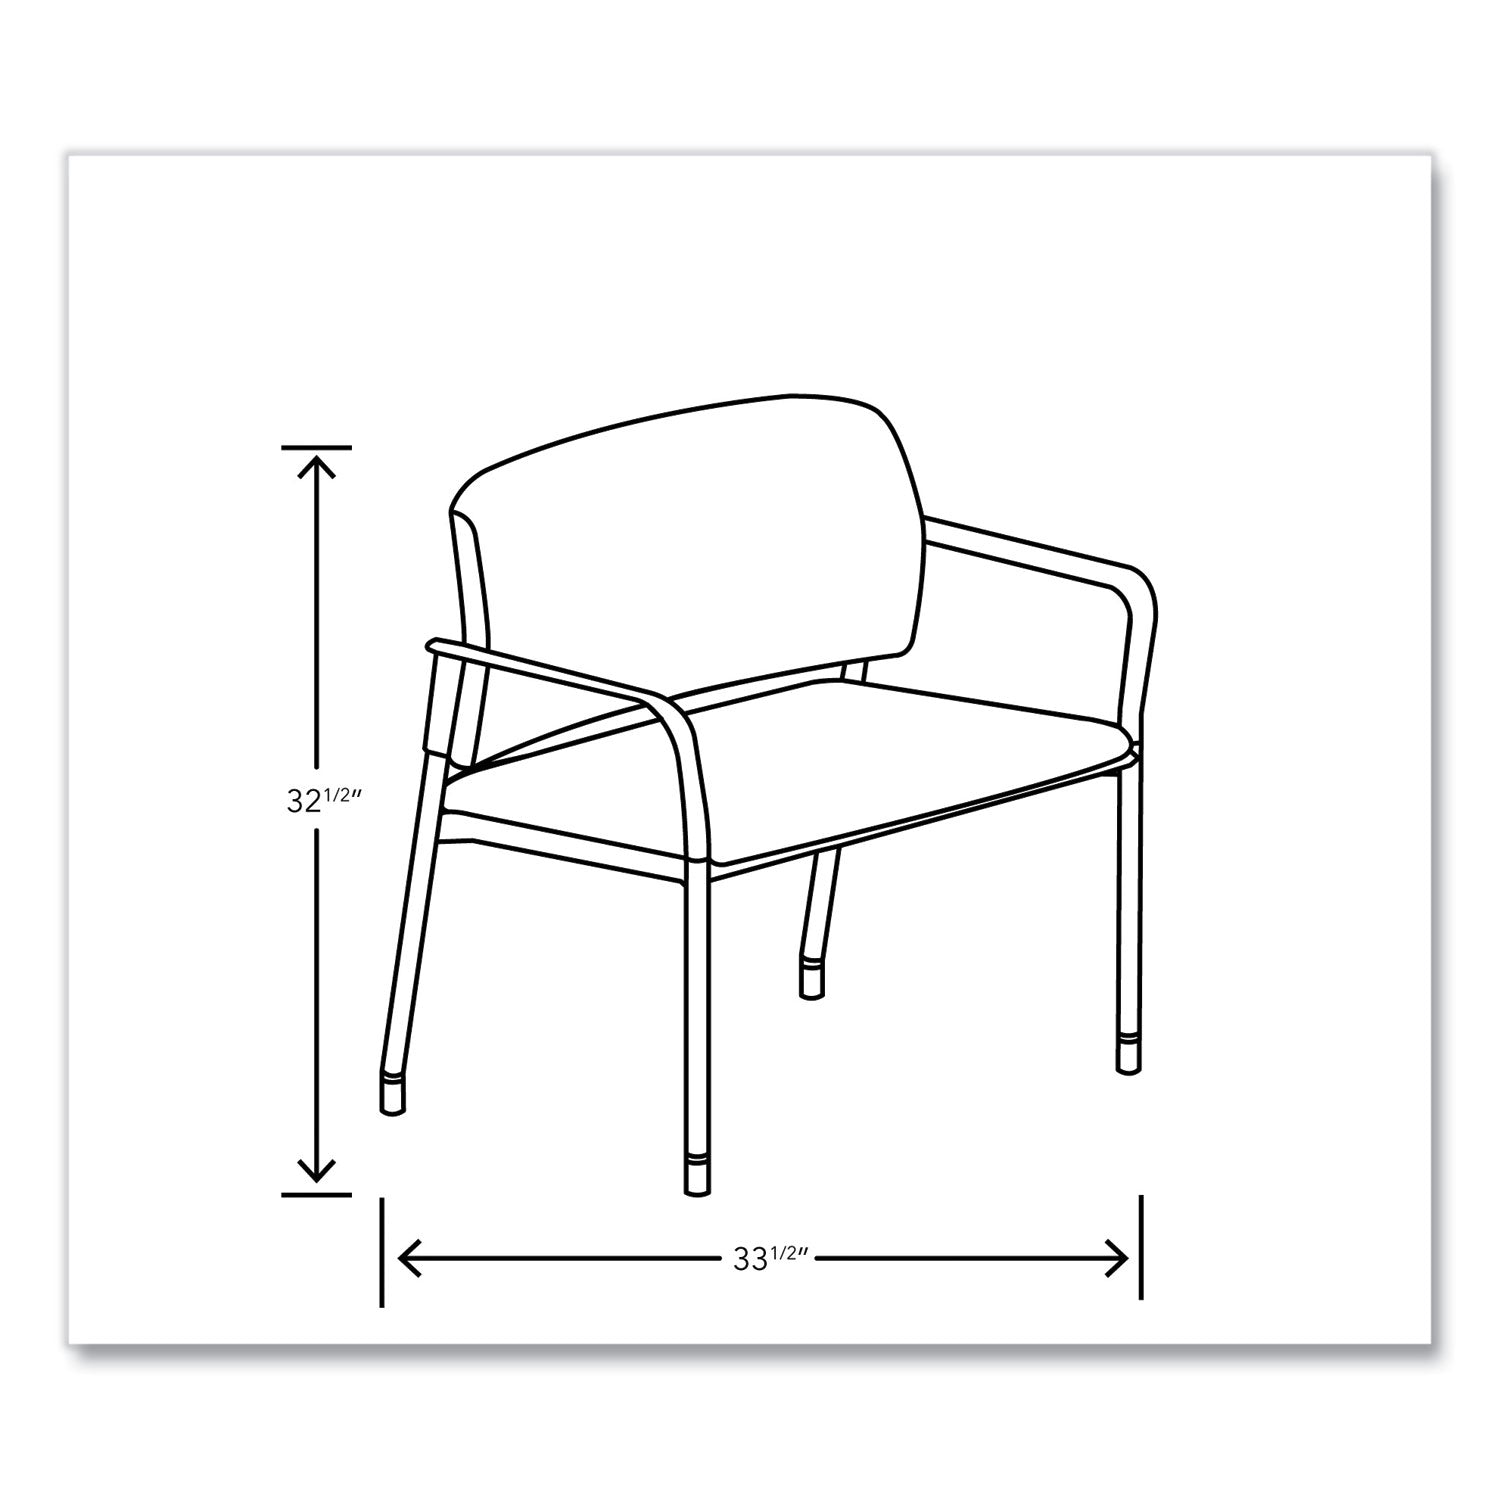 accommodate-series-bariatric-chair-with-arms-335-x-215-x-325-elysian-seat-elysian-back-charblack-legs_honsb50fesx04cb - 4